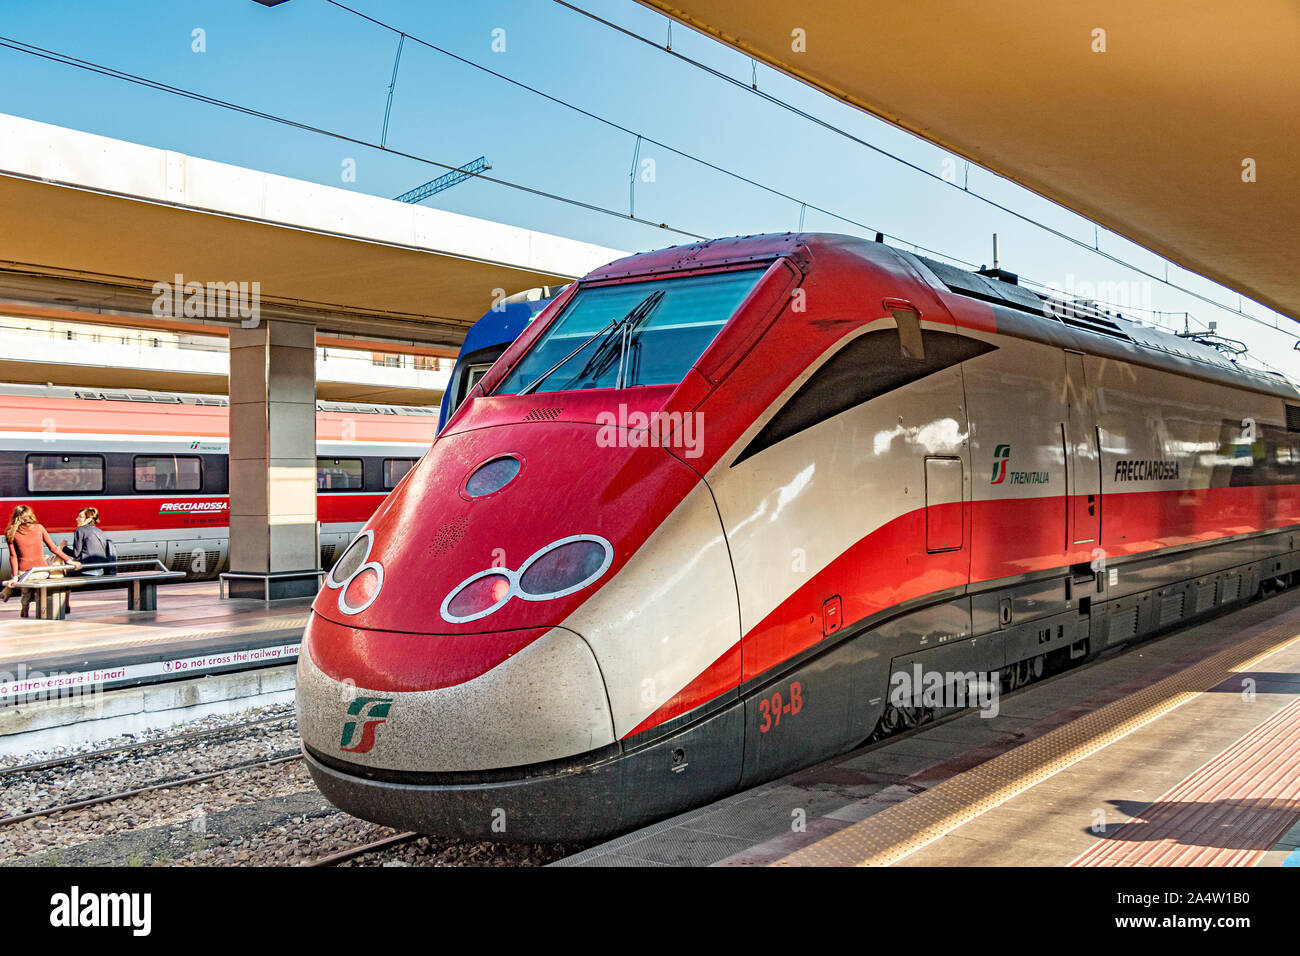 Ein high speed FS Klasse ETR 500 Weingut Frecciarossa Zug am Bahnhof Porta Nuova, Turin, Italien Stockfoto